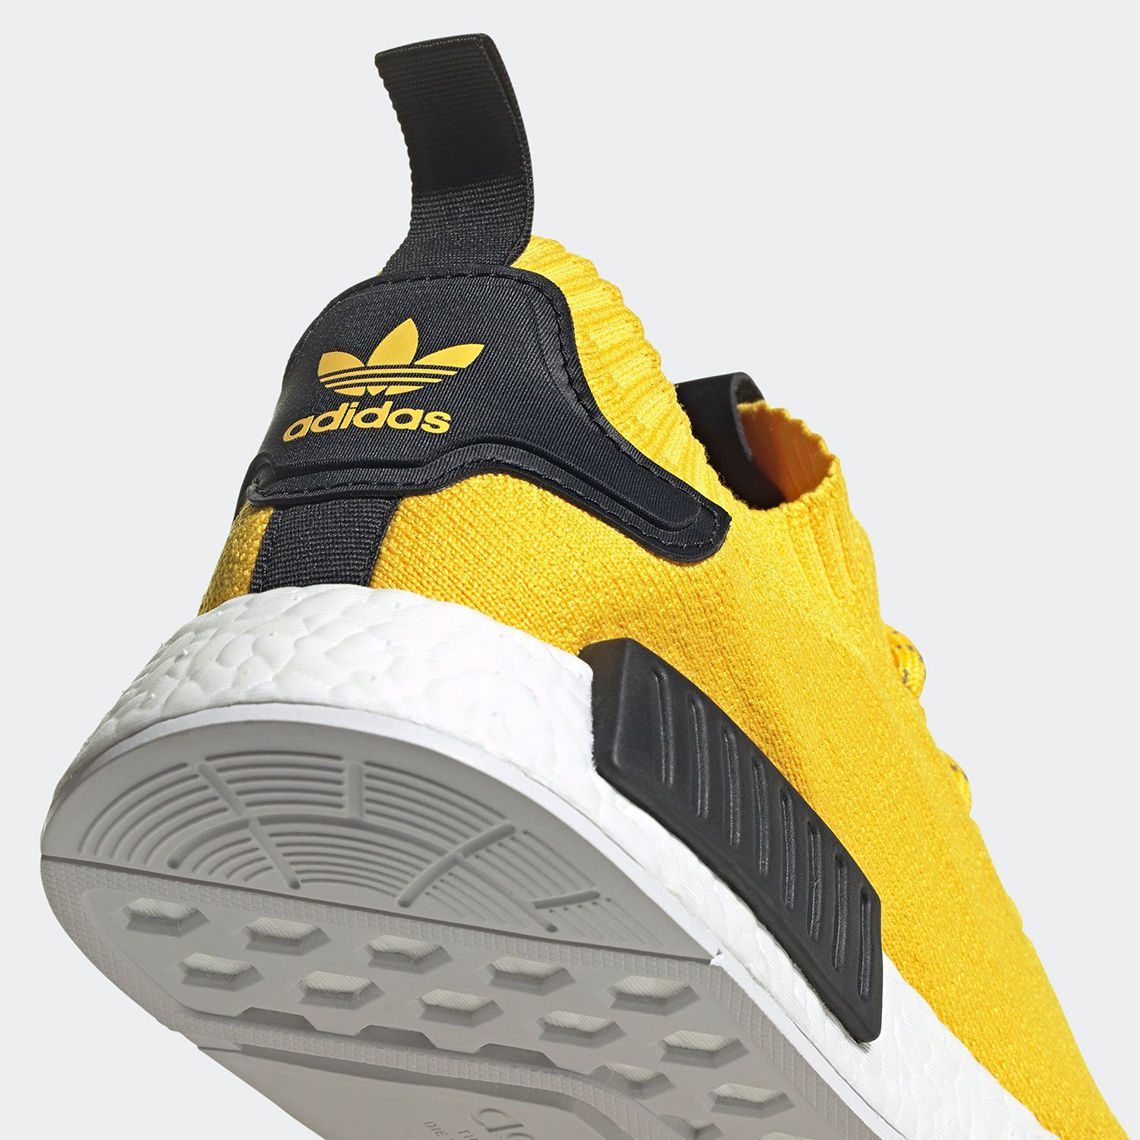 Adidas Nmd R1 Primeknit Yellow Black S23749 1